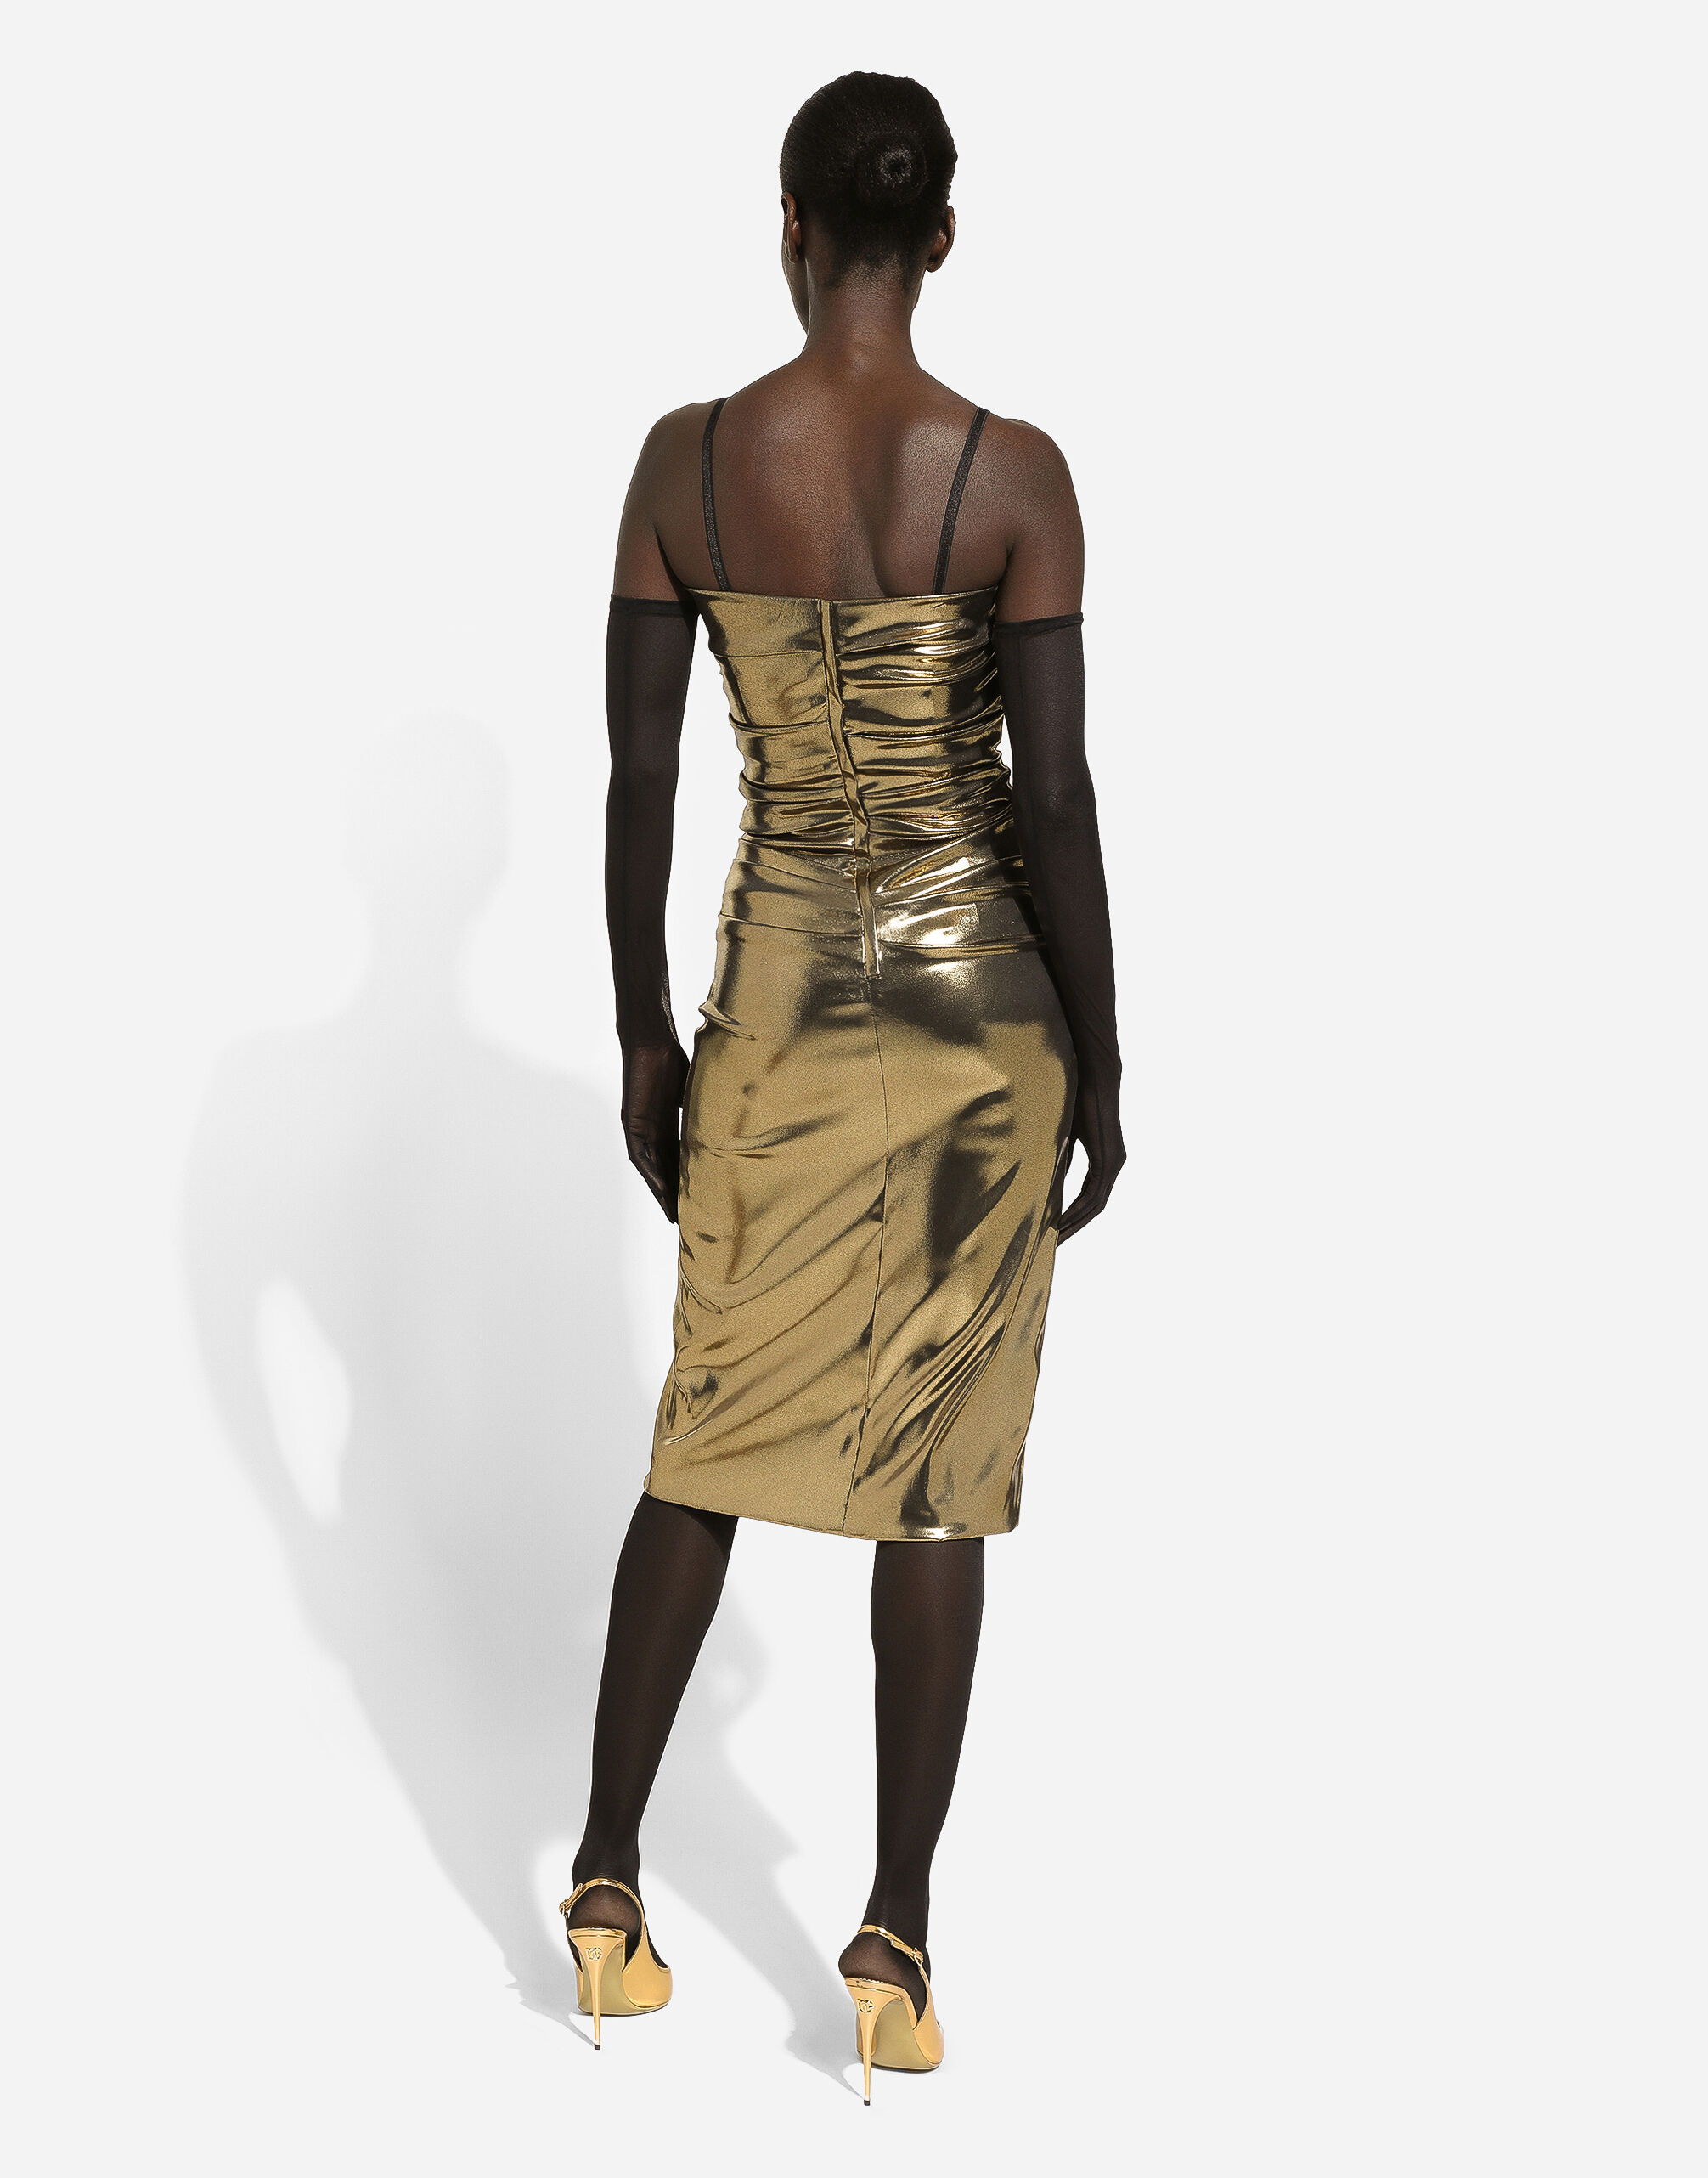 Foiled satin strapless calf-length dress in Gold for 